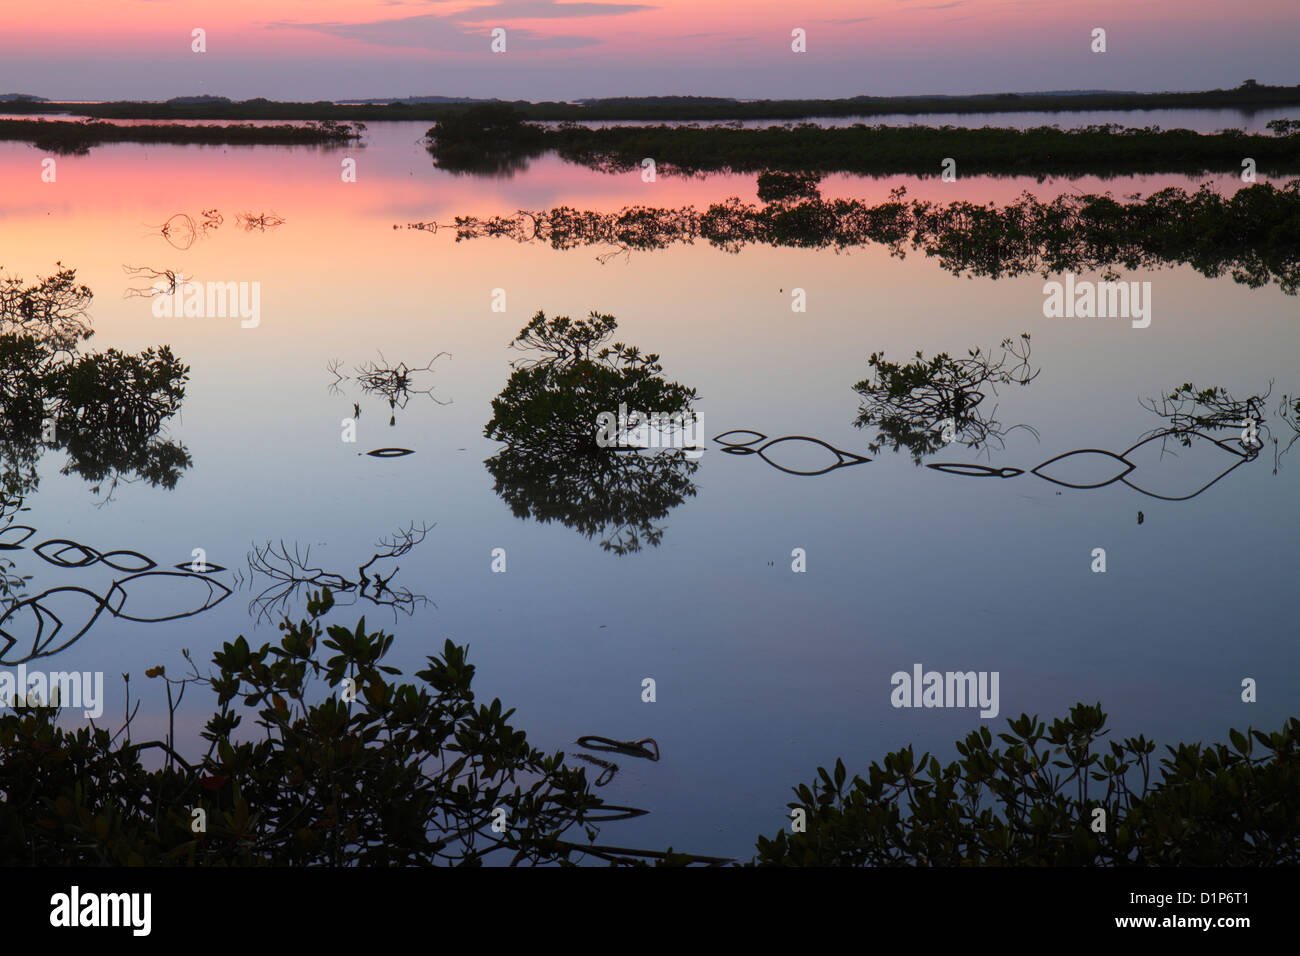 Florida Florida Keys,US highway Route 1 One,Overseas Highway,Key West,Saddlebunch Keys,mangrove,water,Gulf of Mexico Coast,dusk,sunset,scenic,natural, Stock Photo